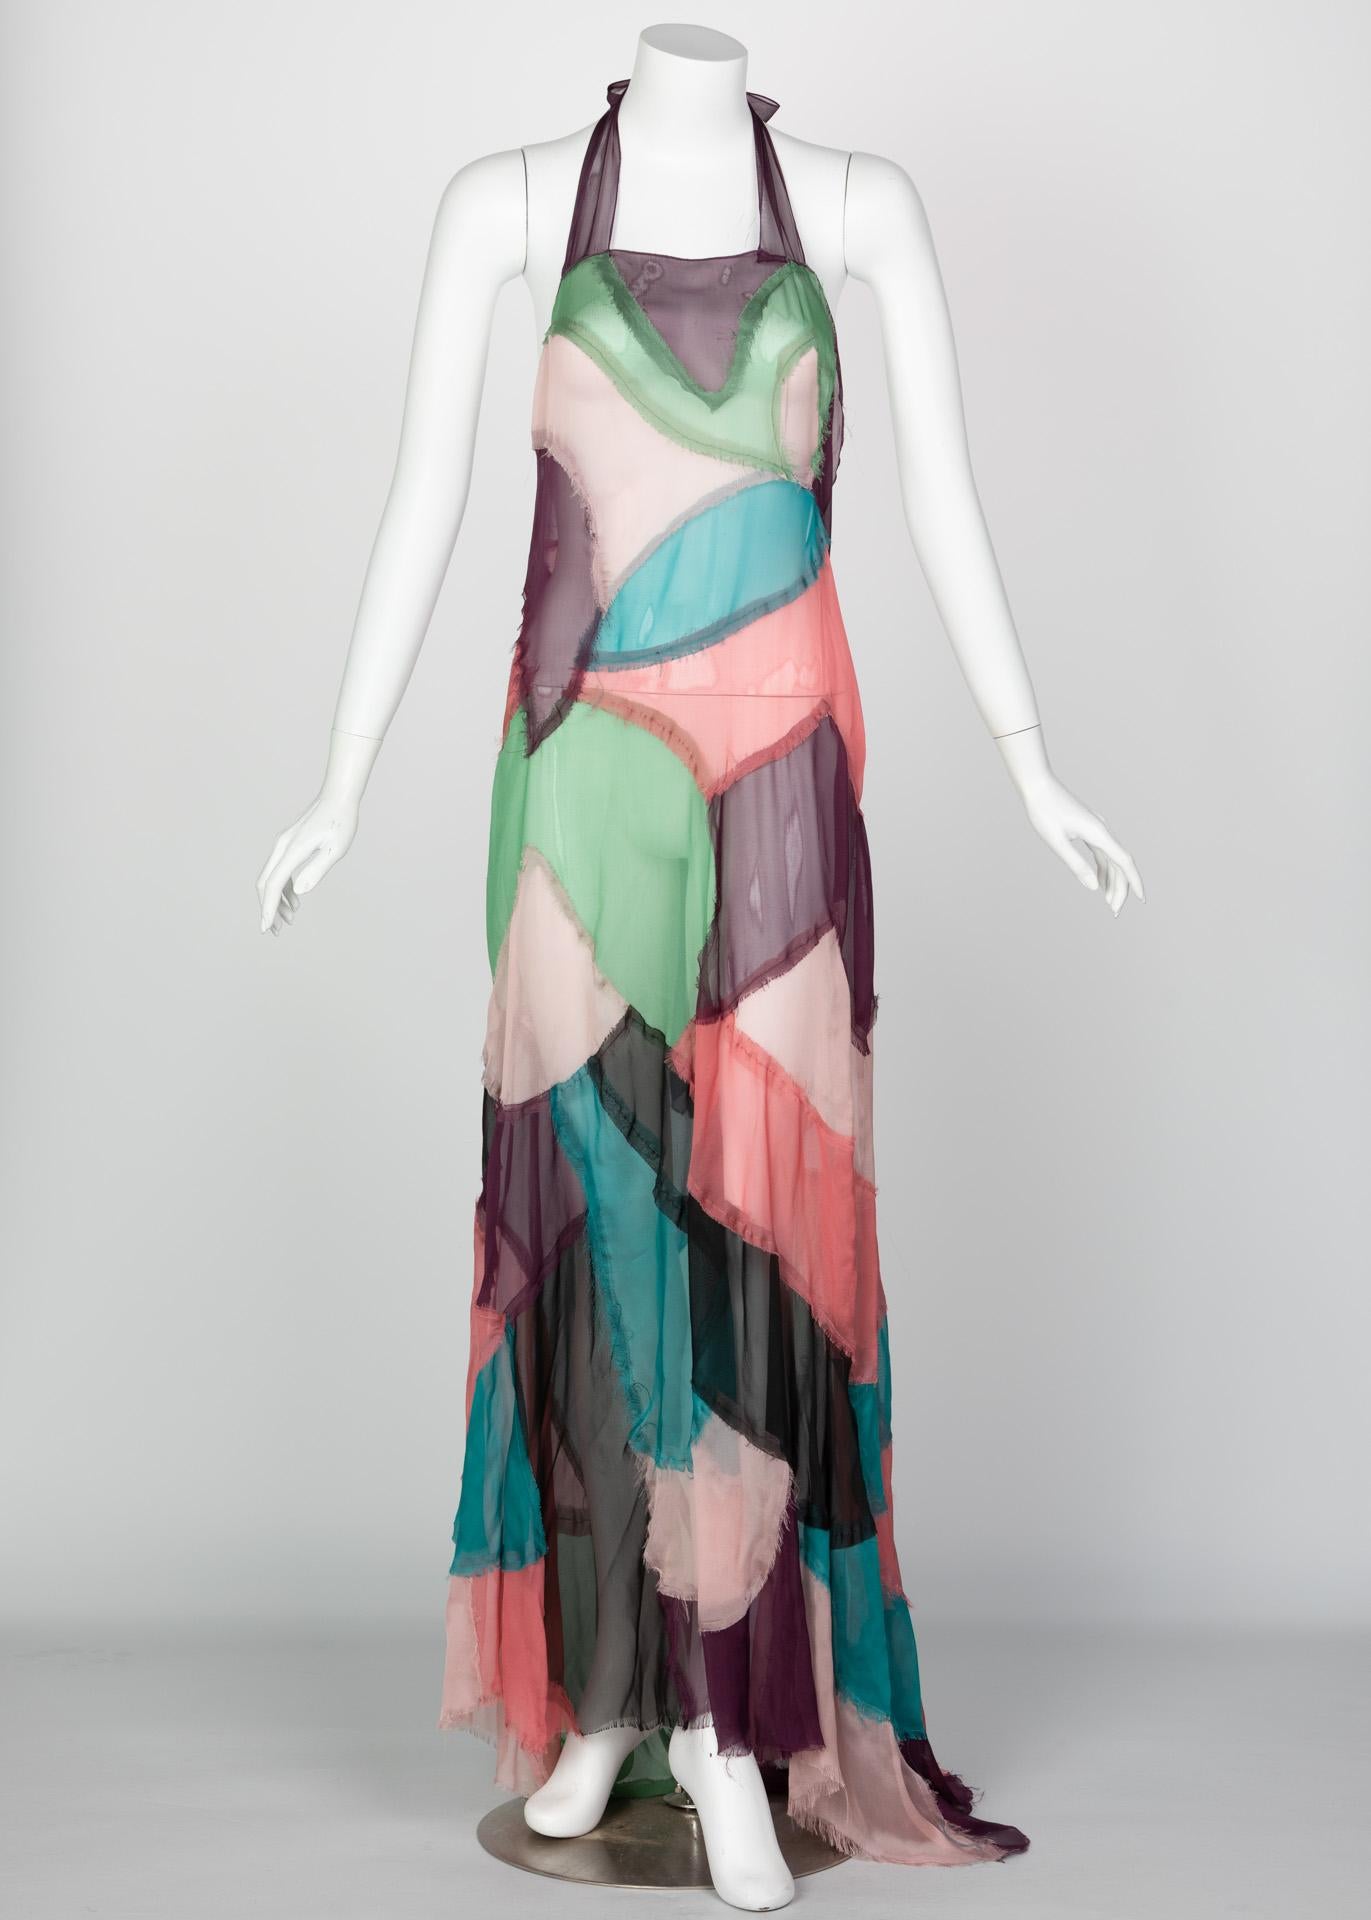 Women's Alberta Ferretti Silk Chiffon Patchwork Open back Halter Gown, 2005 For Sale